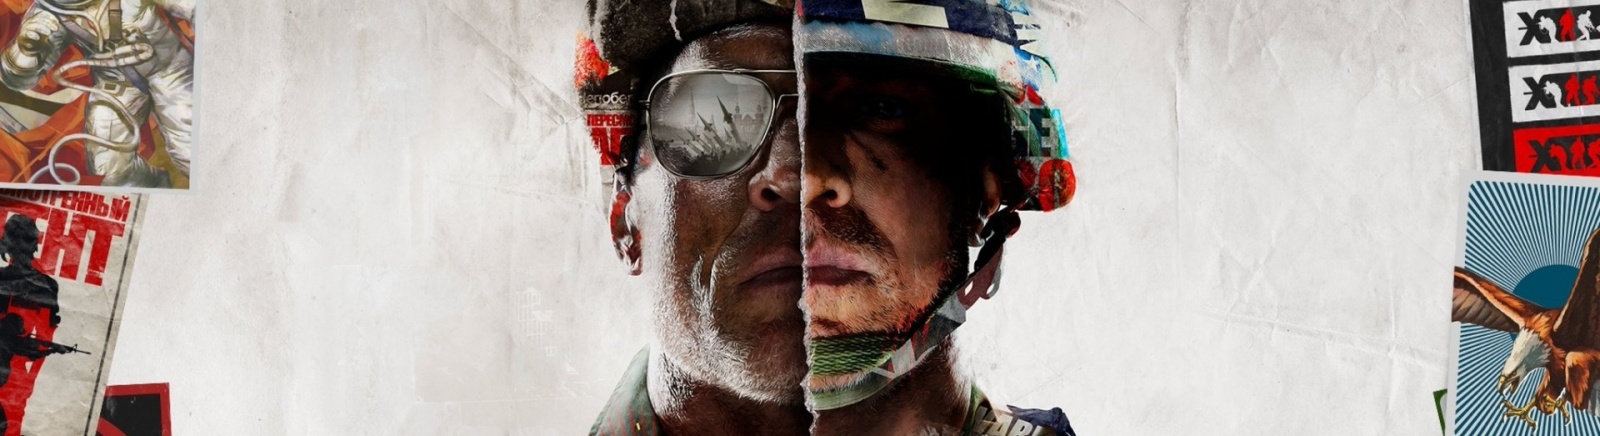 Дата выхода Call of Duty: Black Ops Cold War  на PC, PS5 и Xbox Series X/S в России и во всем мире